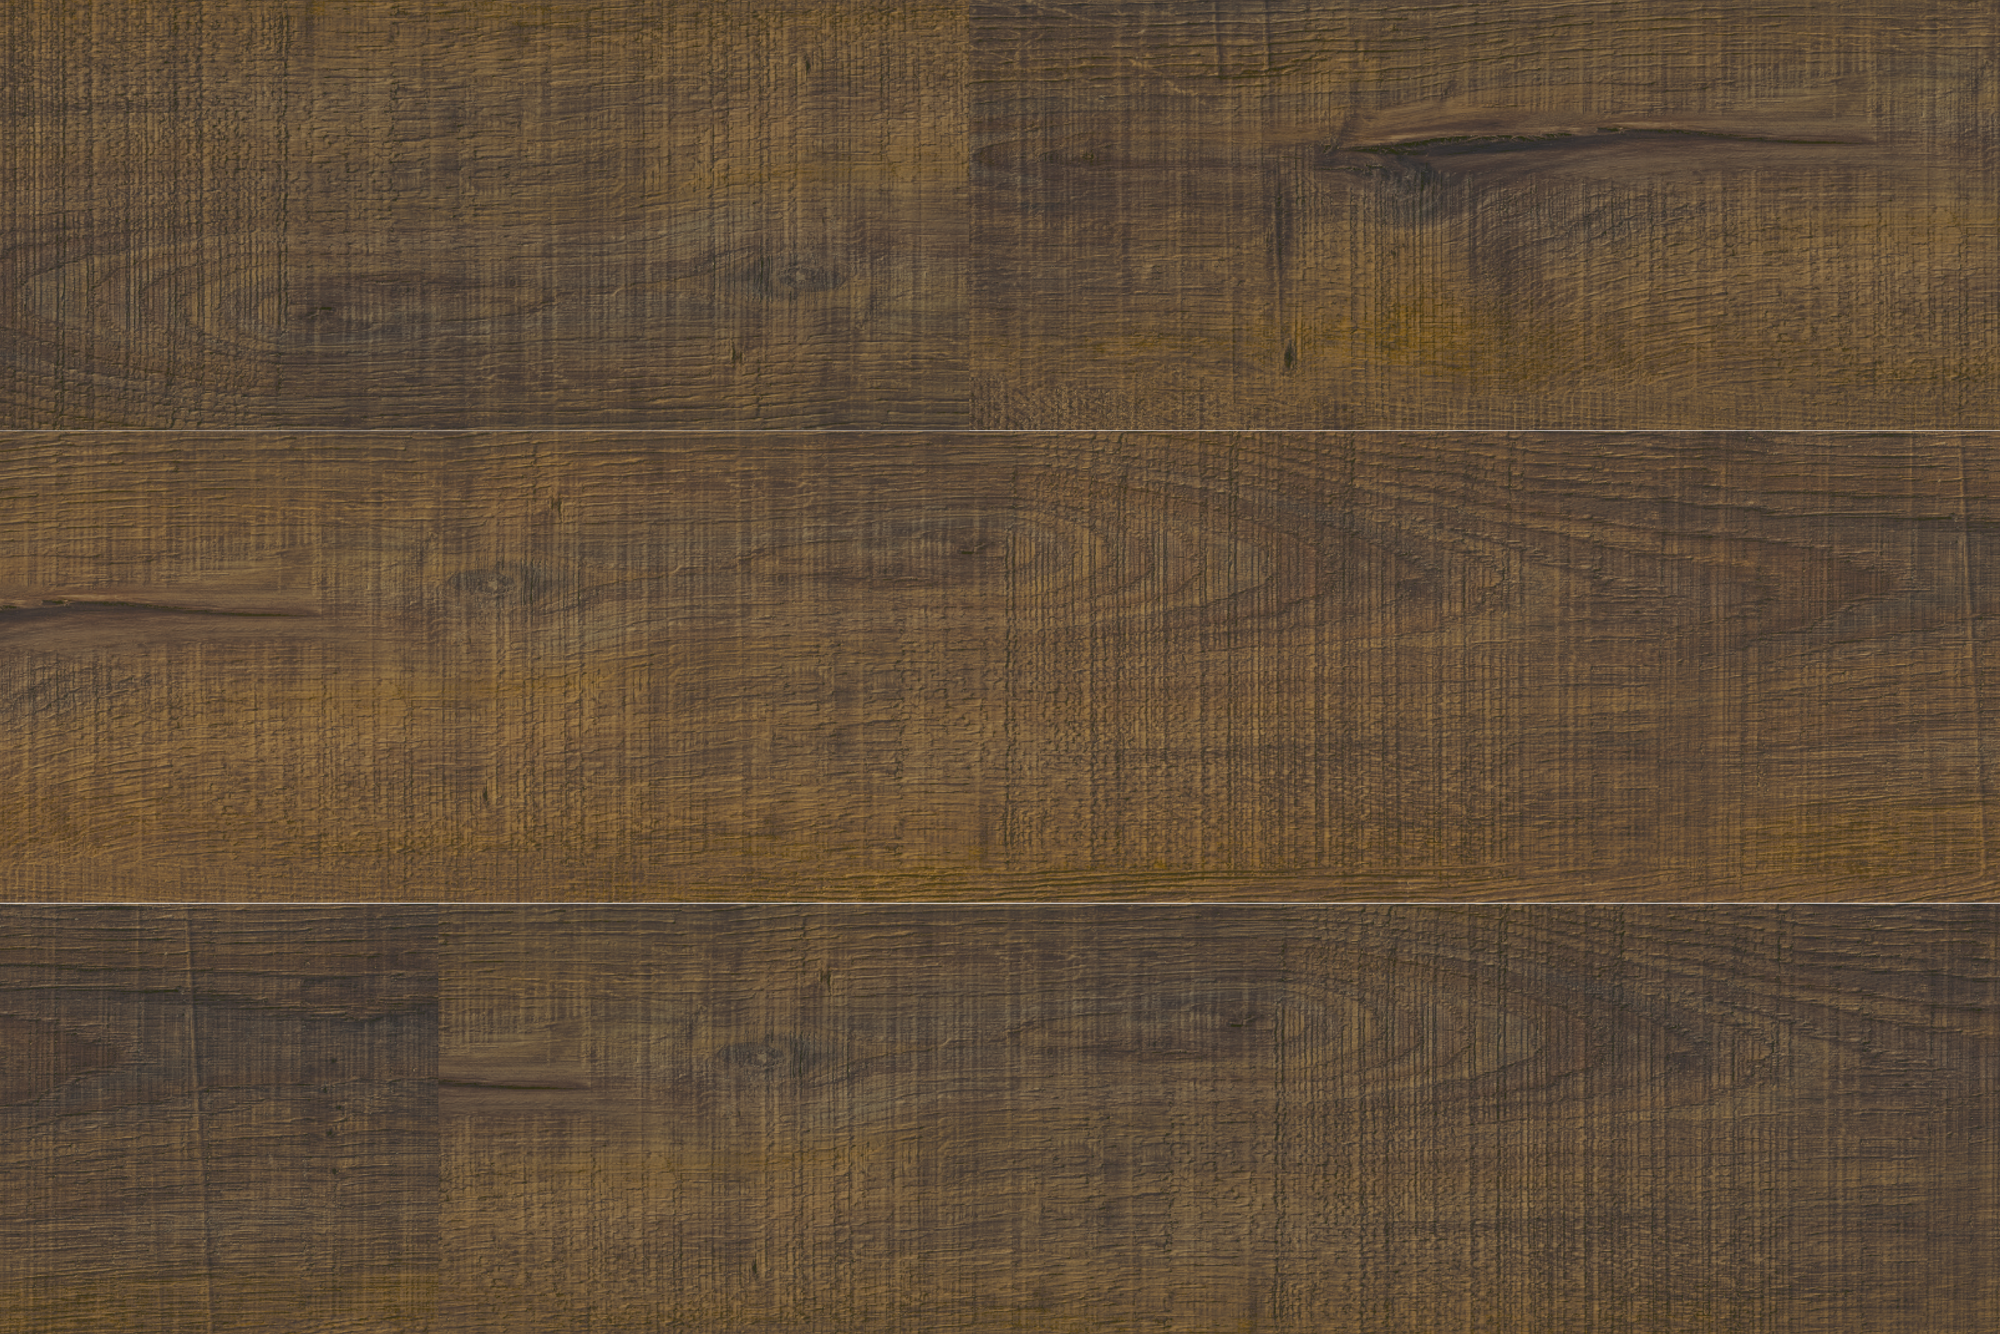 Eton Sawn glue down luxury vinyl plank from our Vinyl Flooring collection